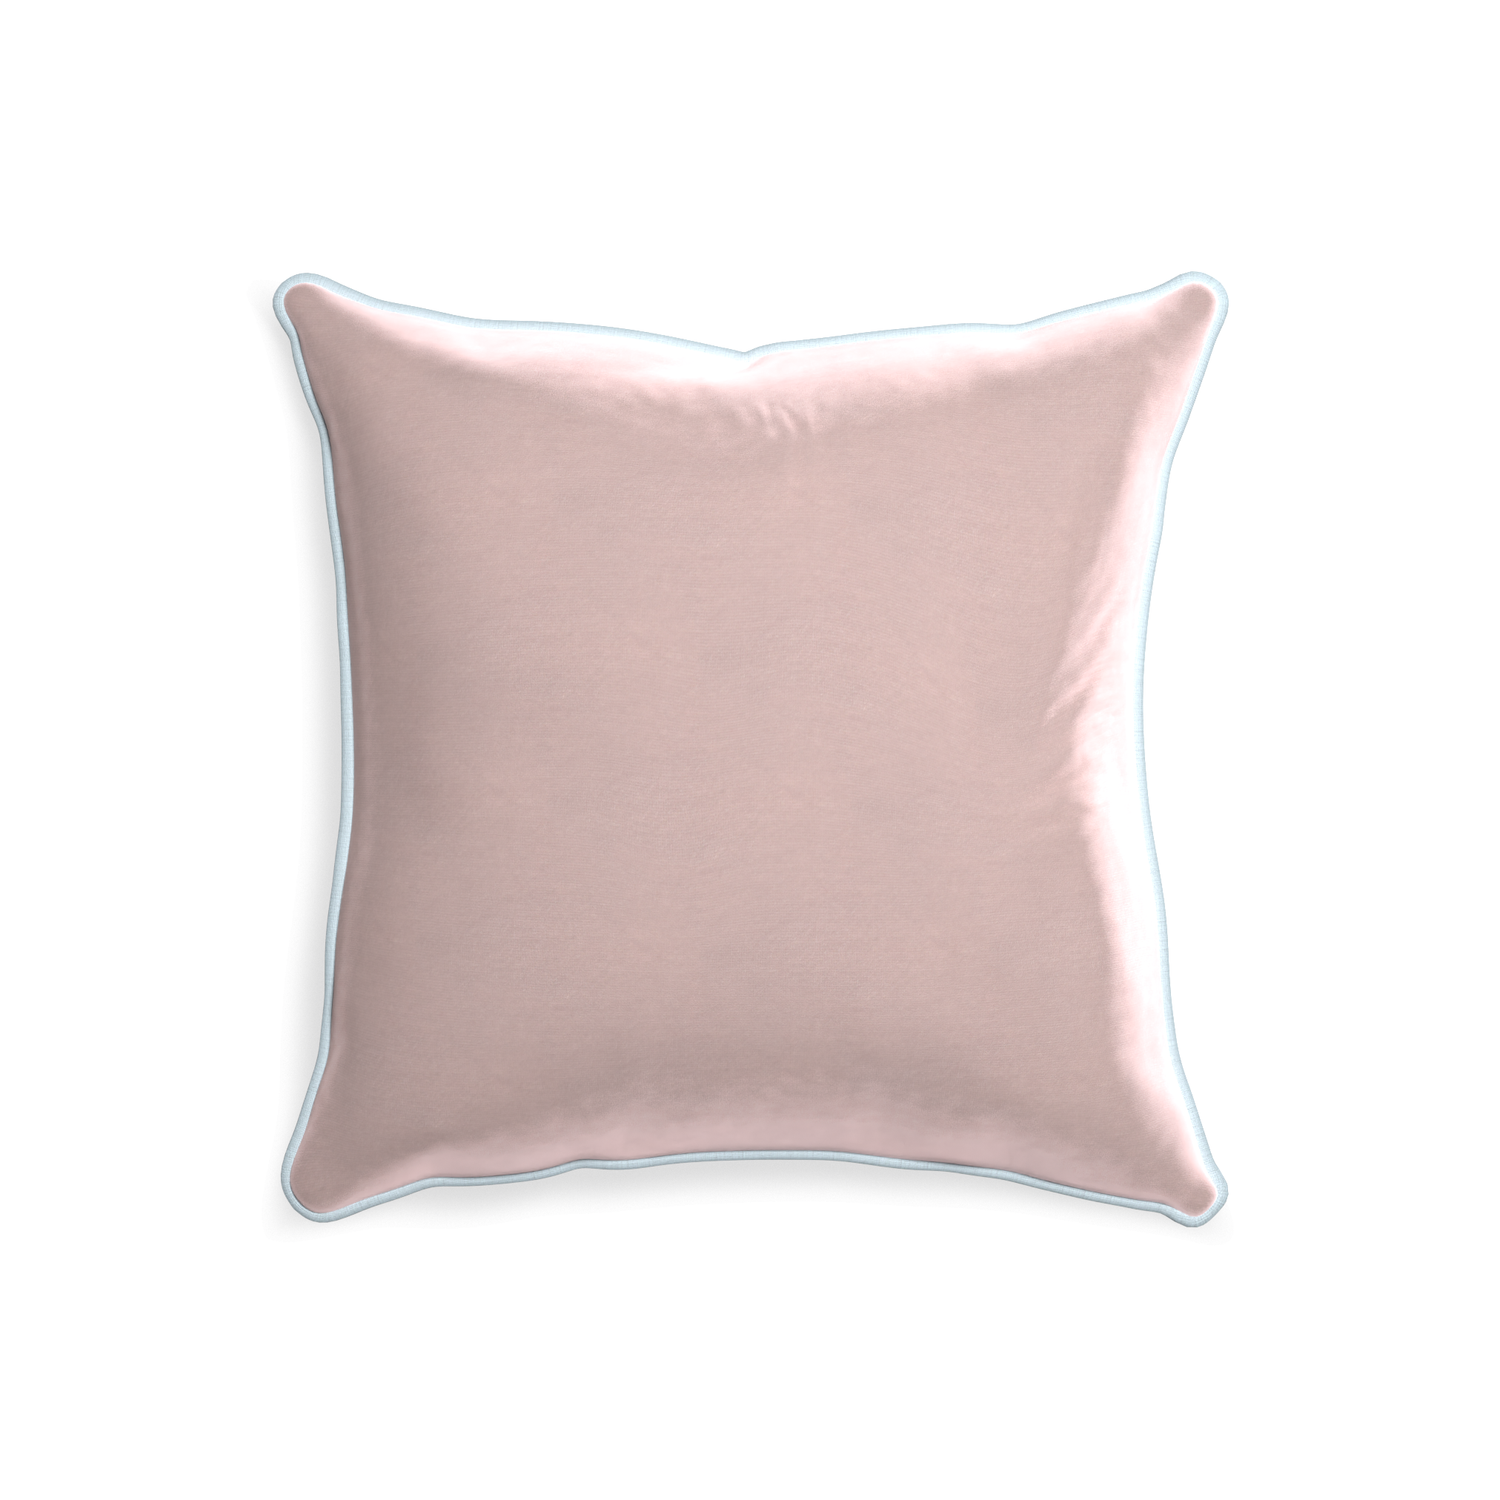 20-square rose velvet custom pillow with powder piping on white background